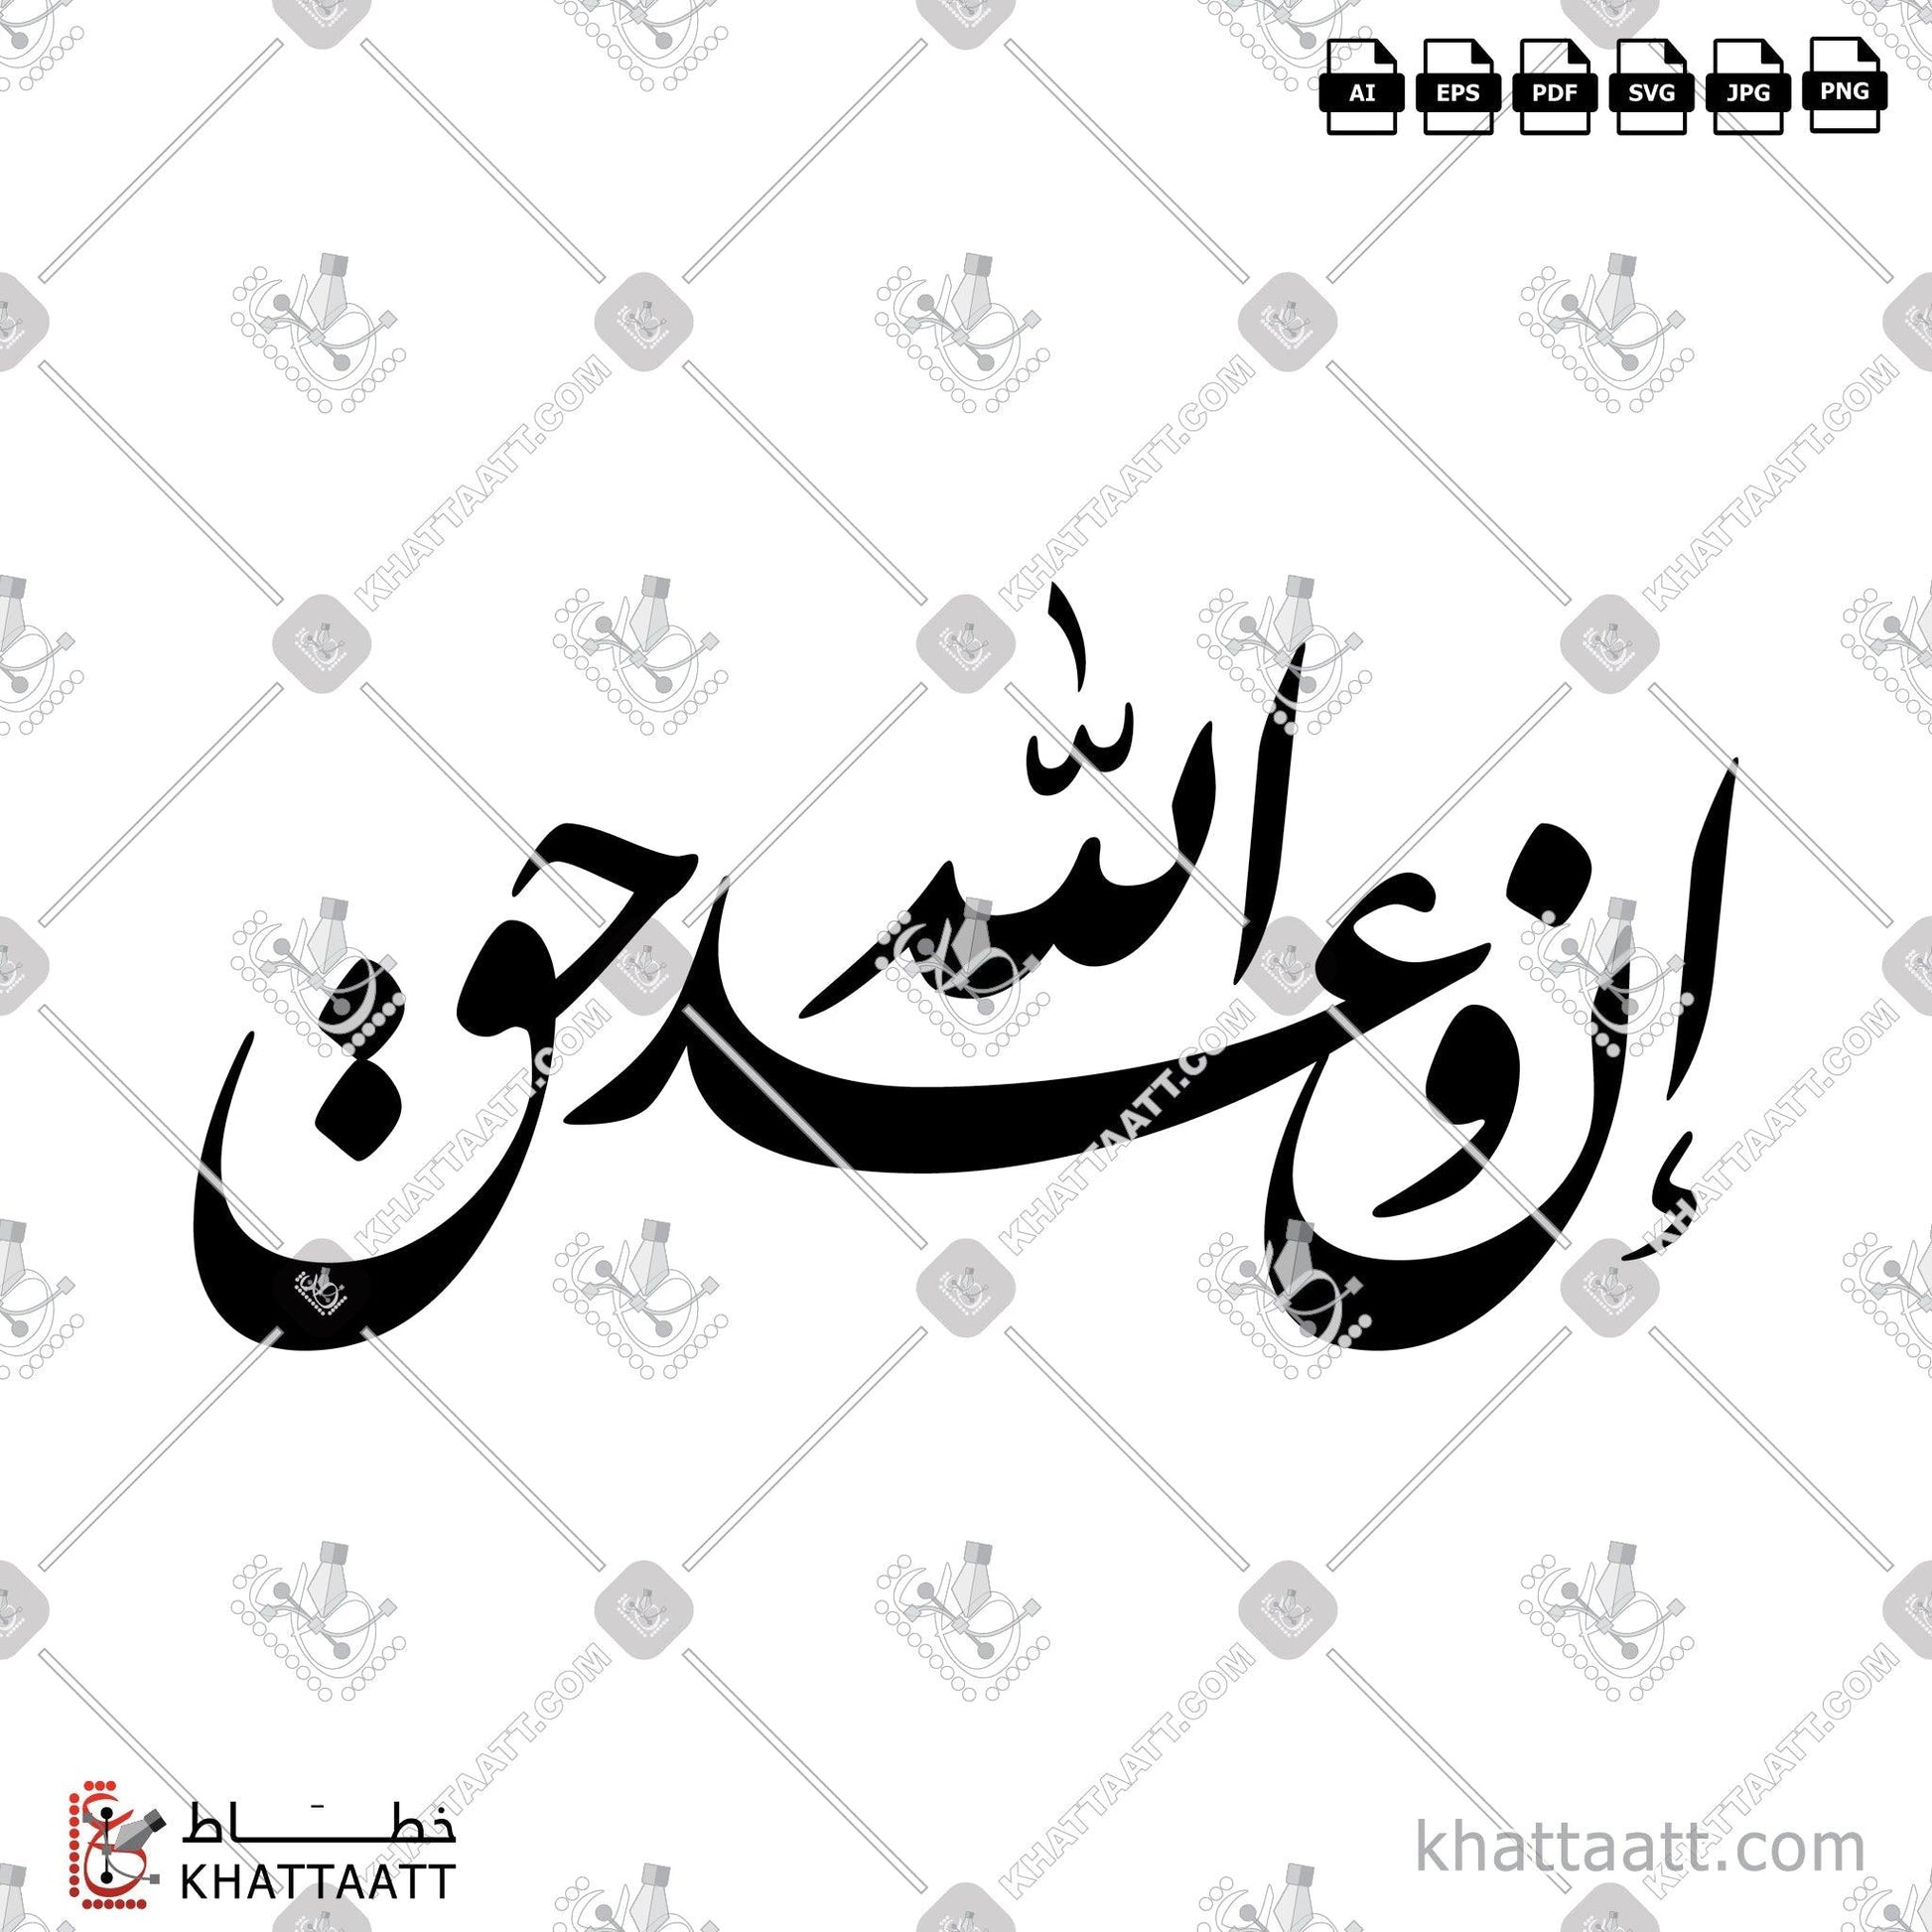 Download Arabic Calligraphy of إن وعد الله حق in Farsi - الخط الفارسي in vector and .png